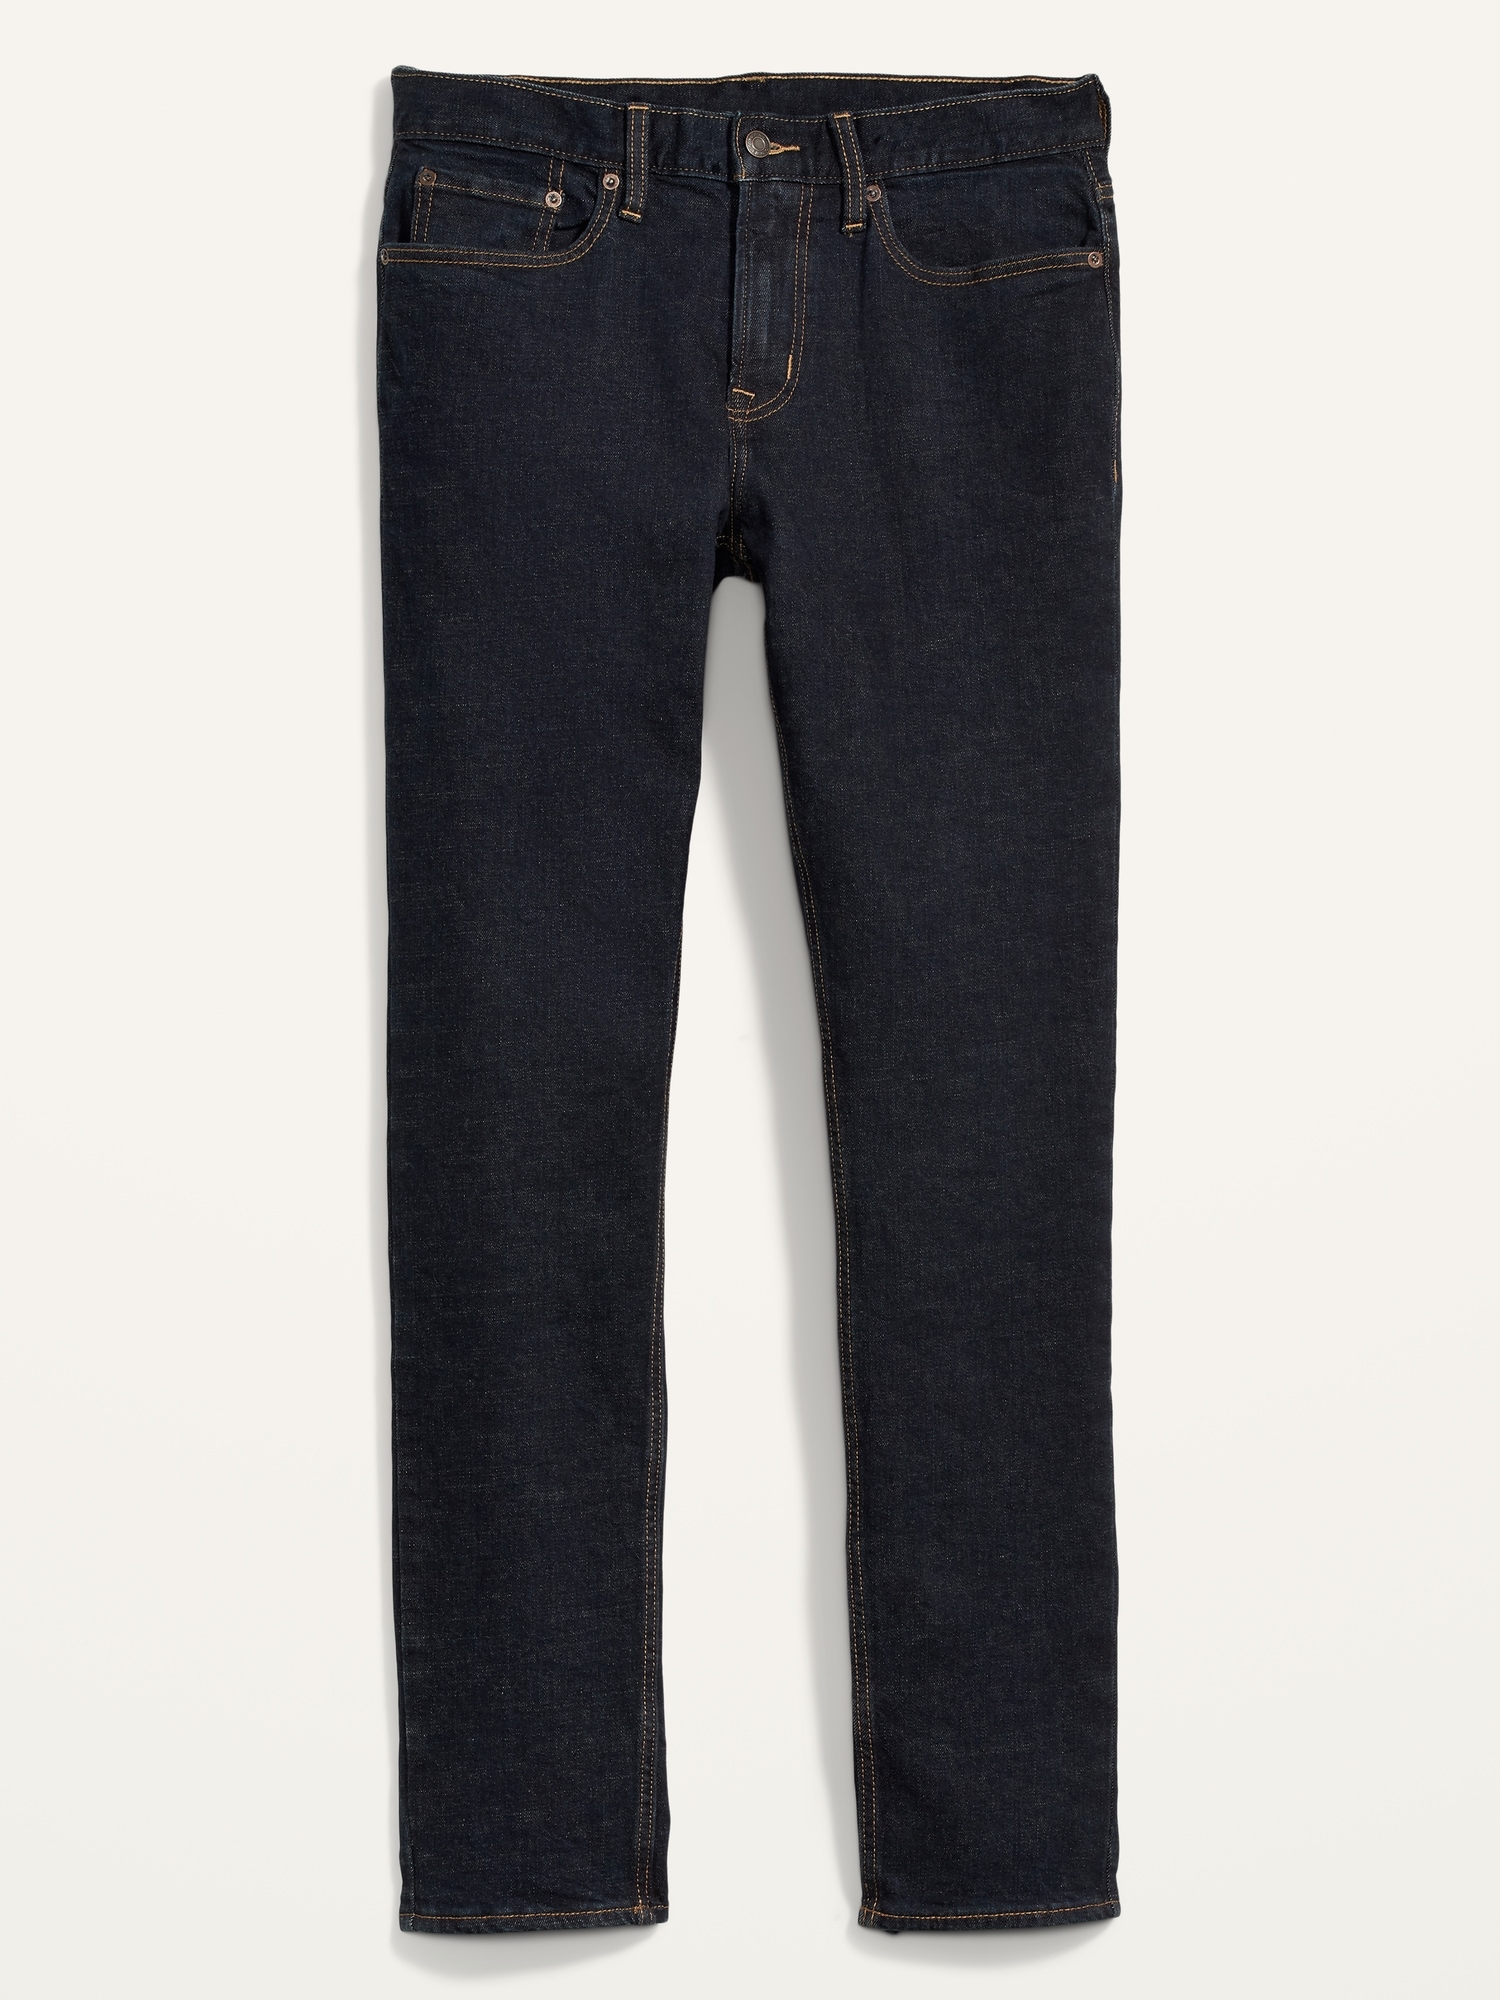 Slim Built-In-Flex Jeans For Men | Old Navy